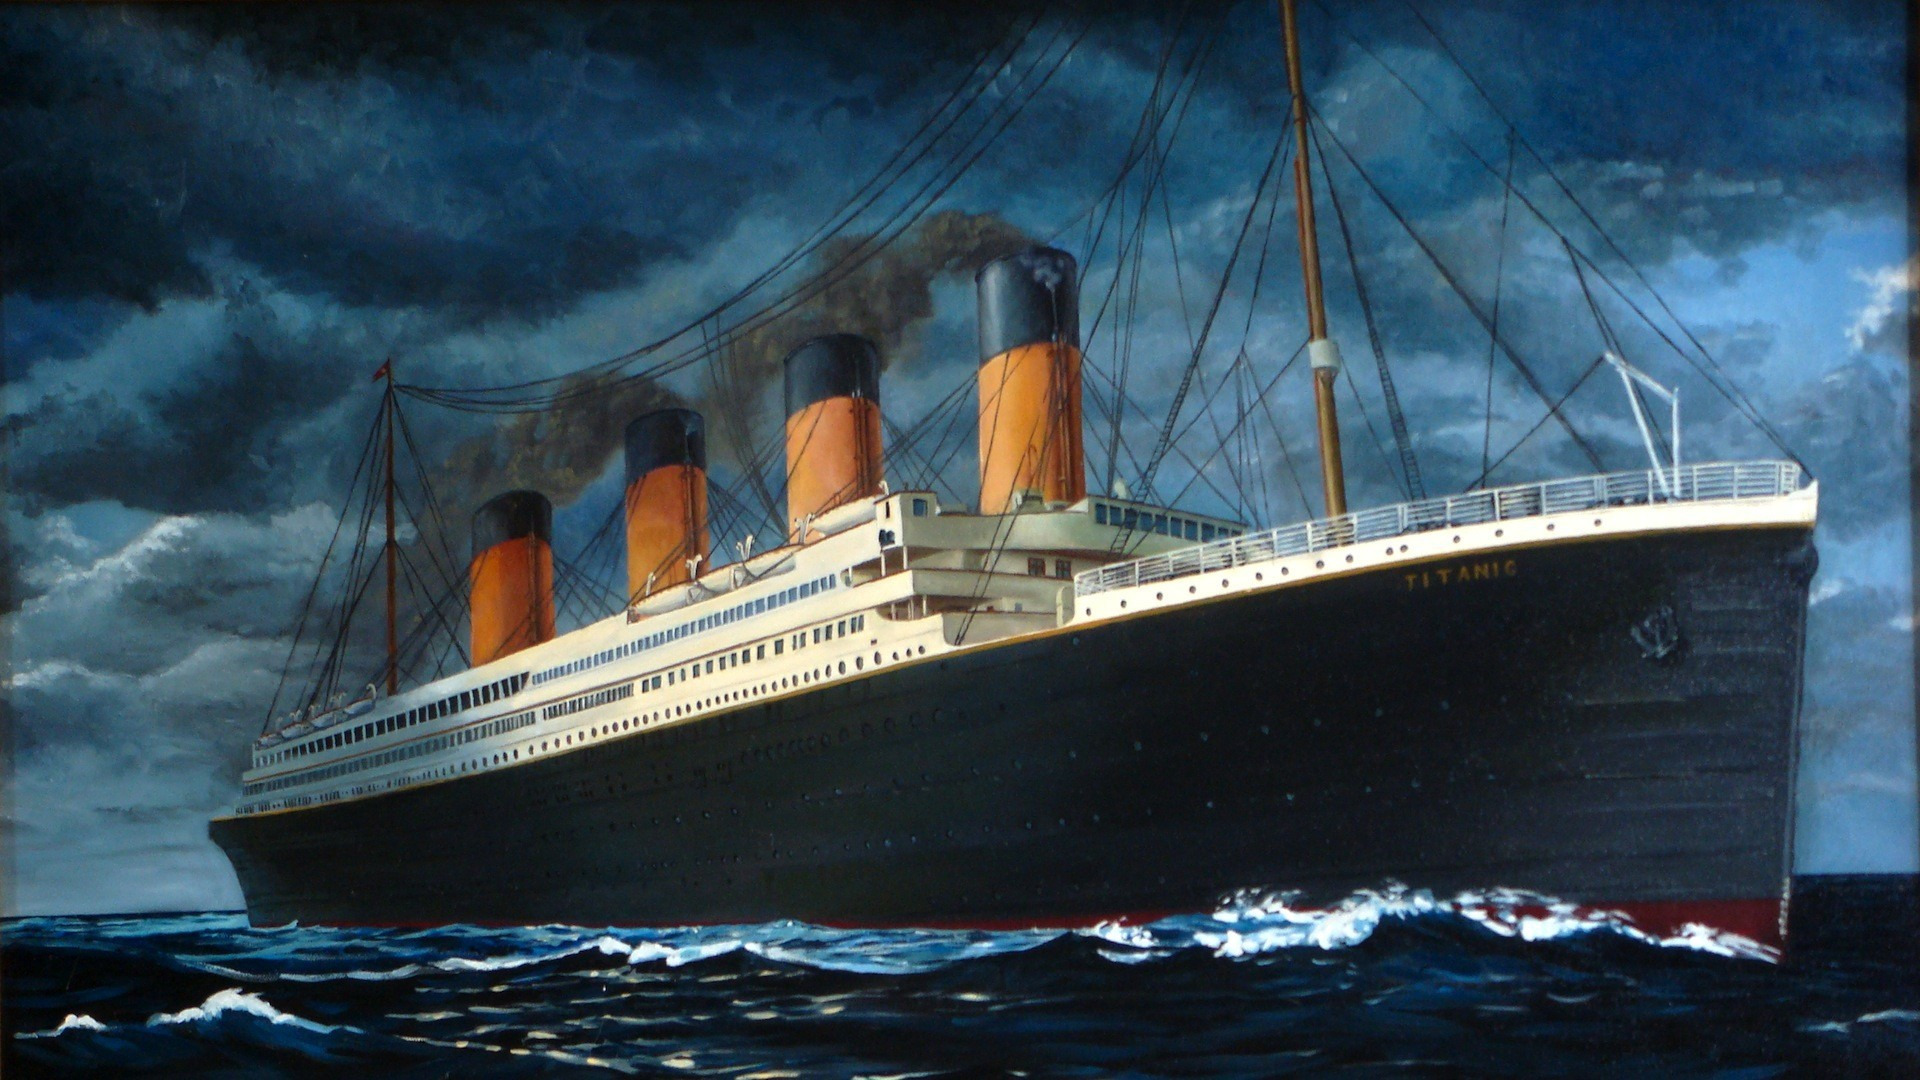 Show Titanic: The Mission